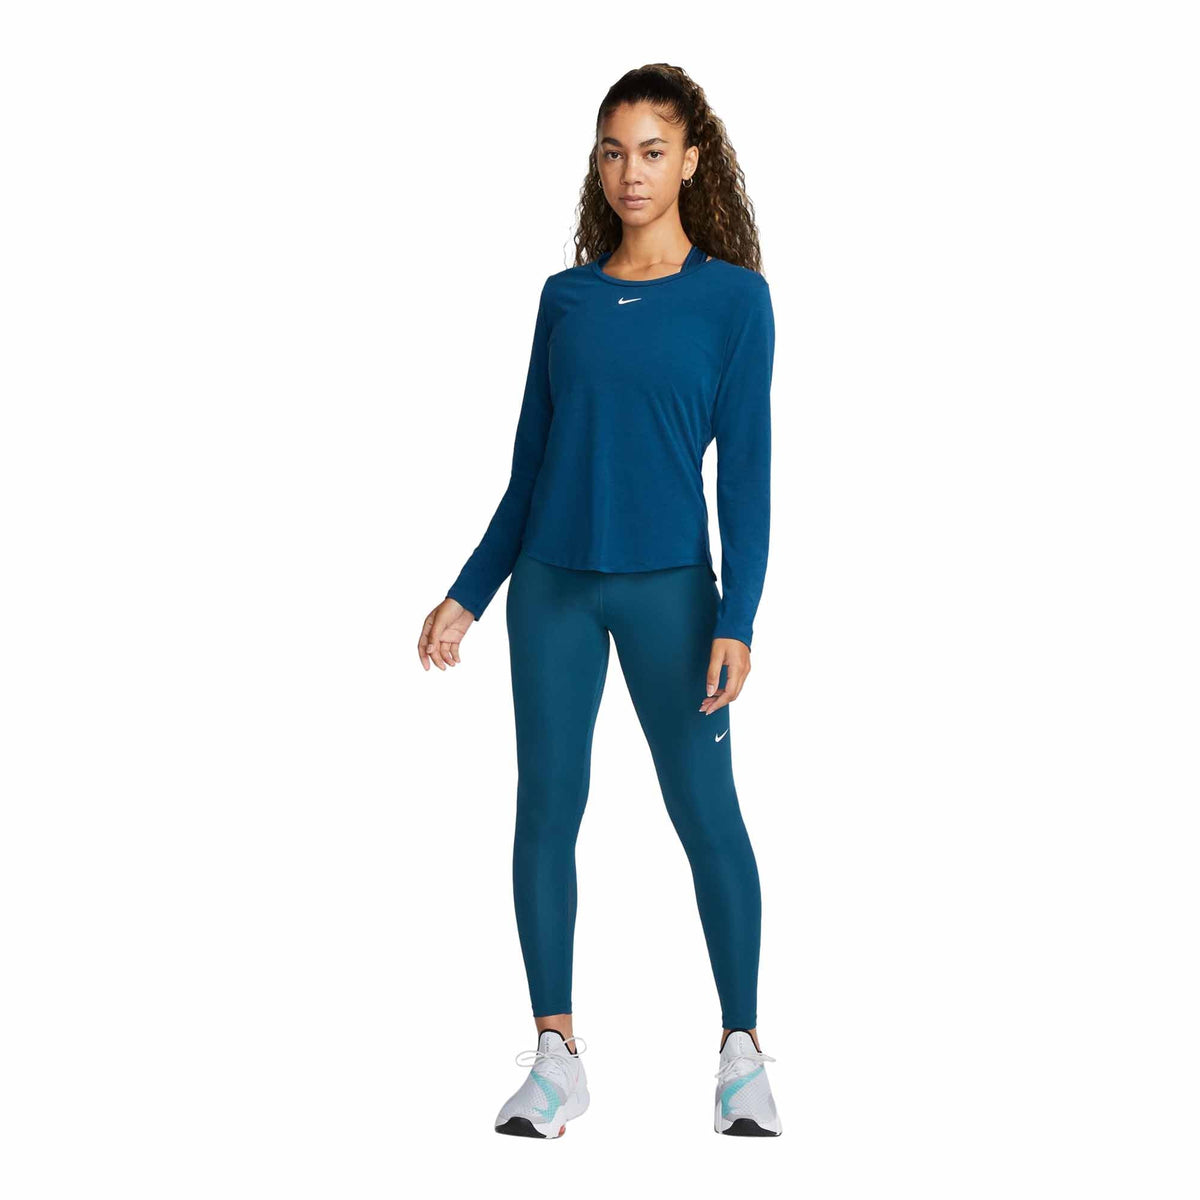 Nike Pro Leggings Womens Small Mesh Panel Dri-Fit Black Stretch